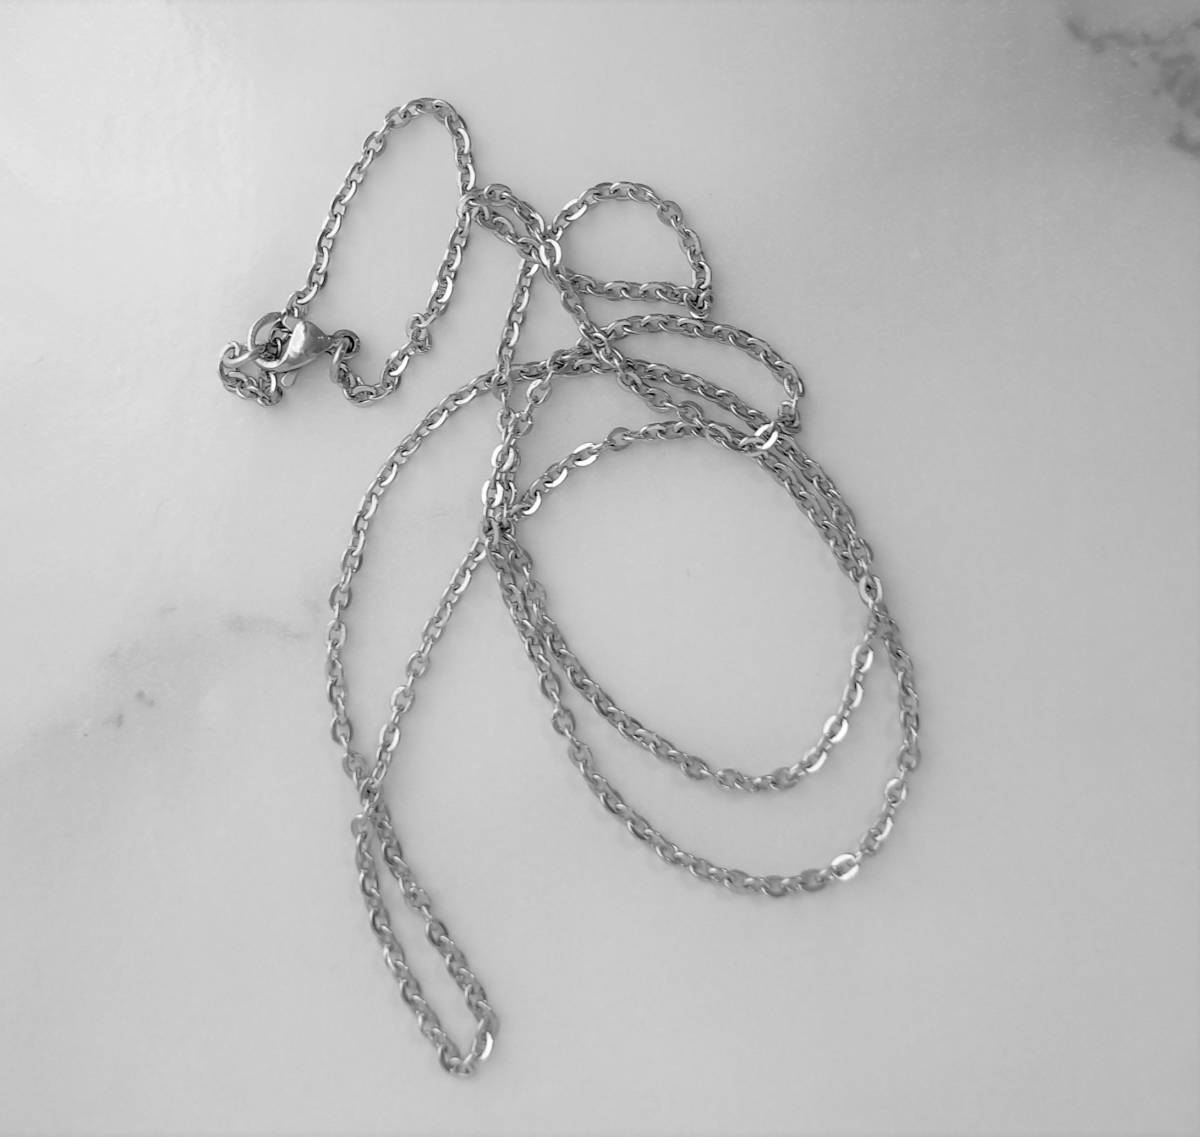  adzuki bean chain necklace 65cm 2mm silver stainless steel red beans chain men's 